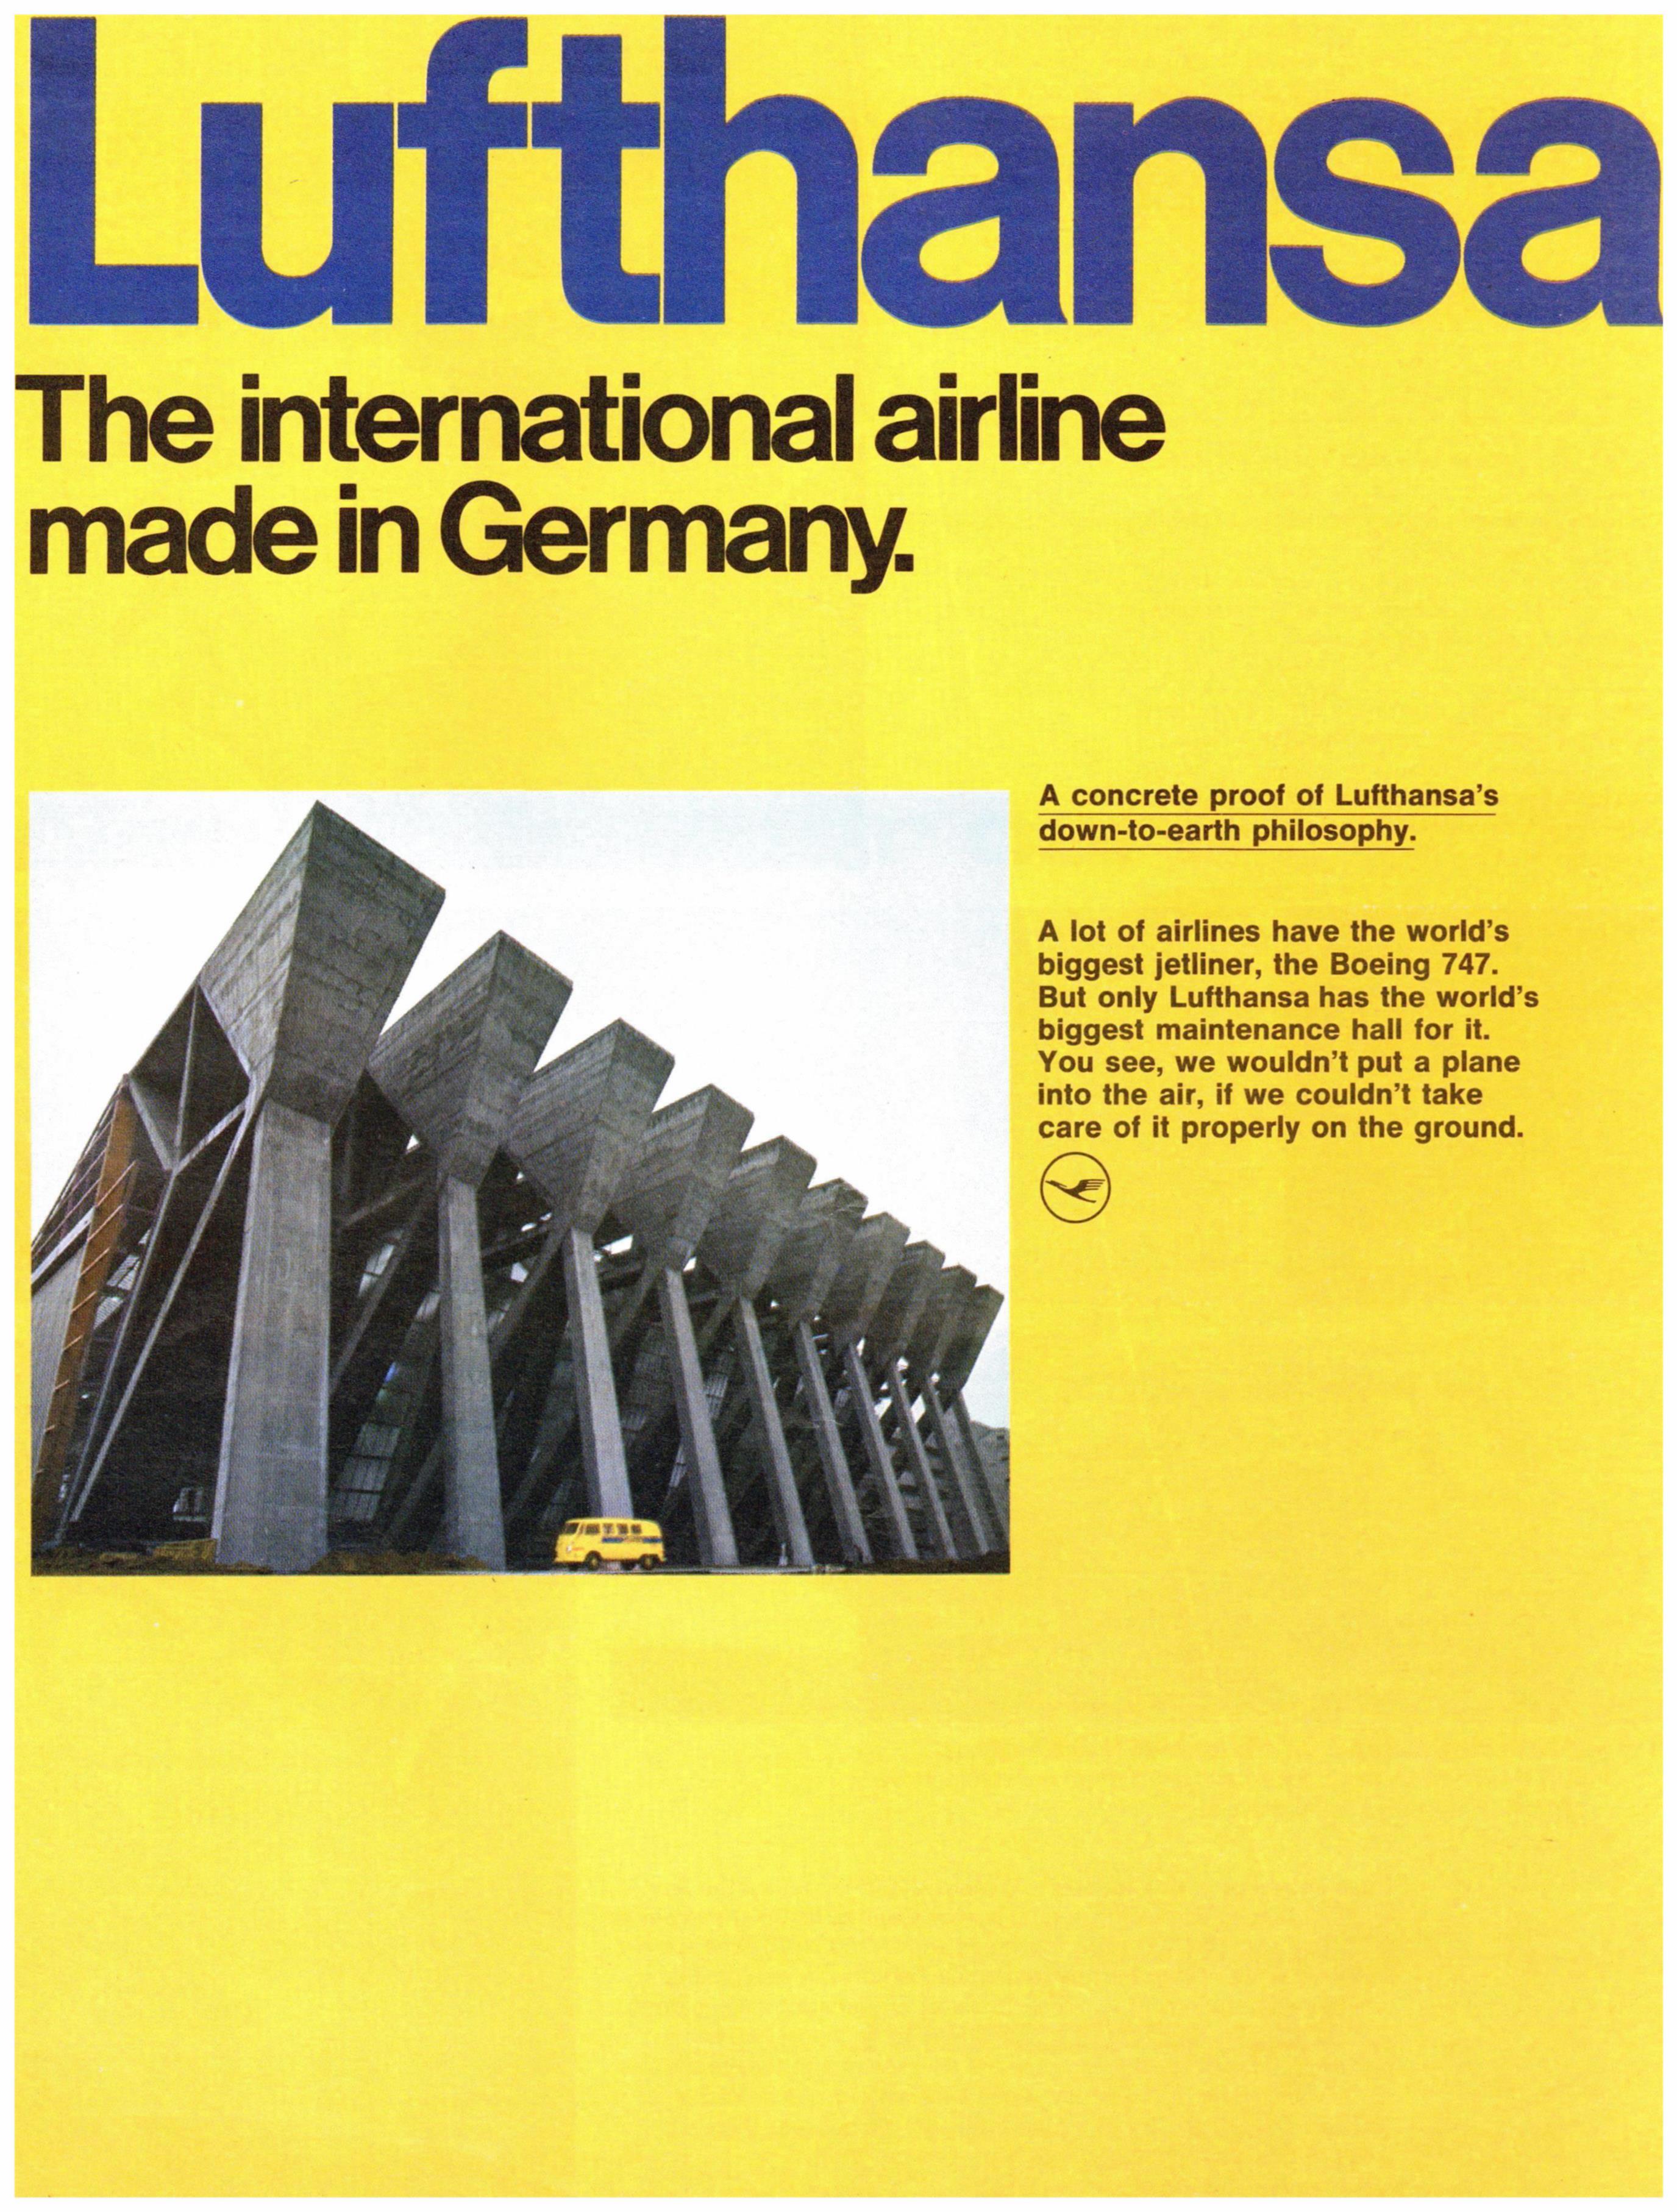 Lufthansa 1970 04.jpg